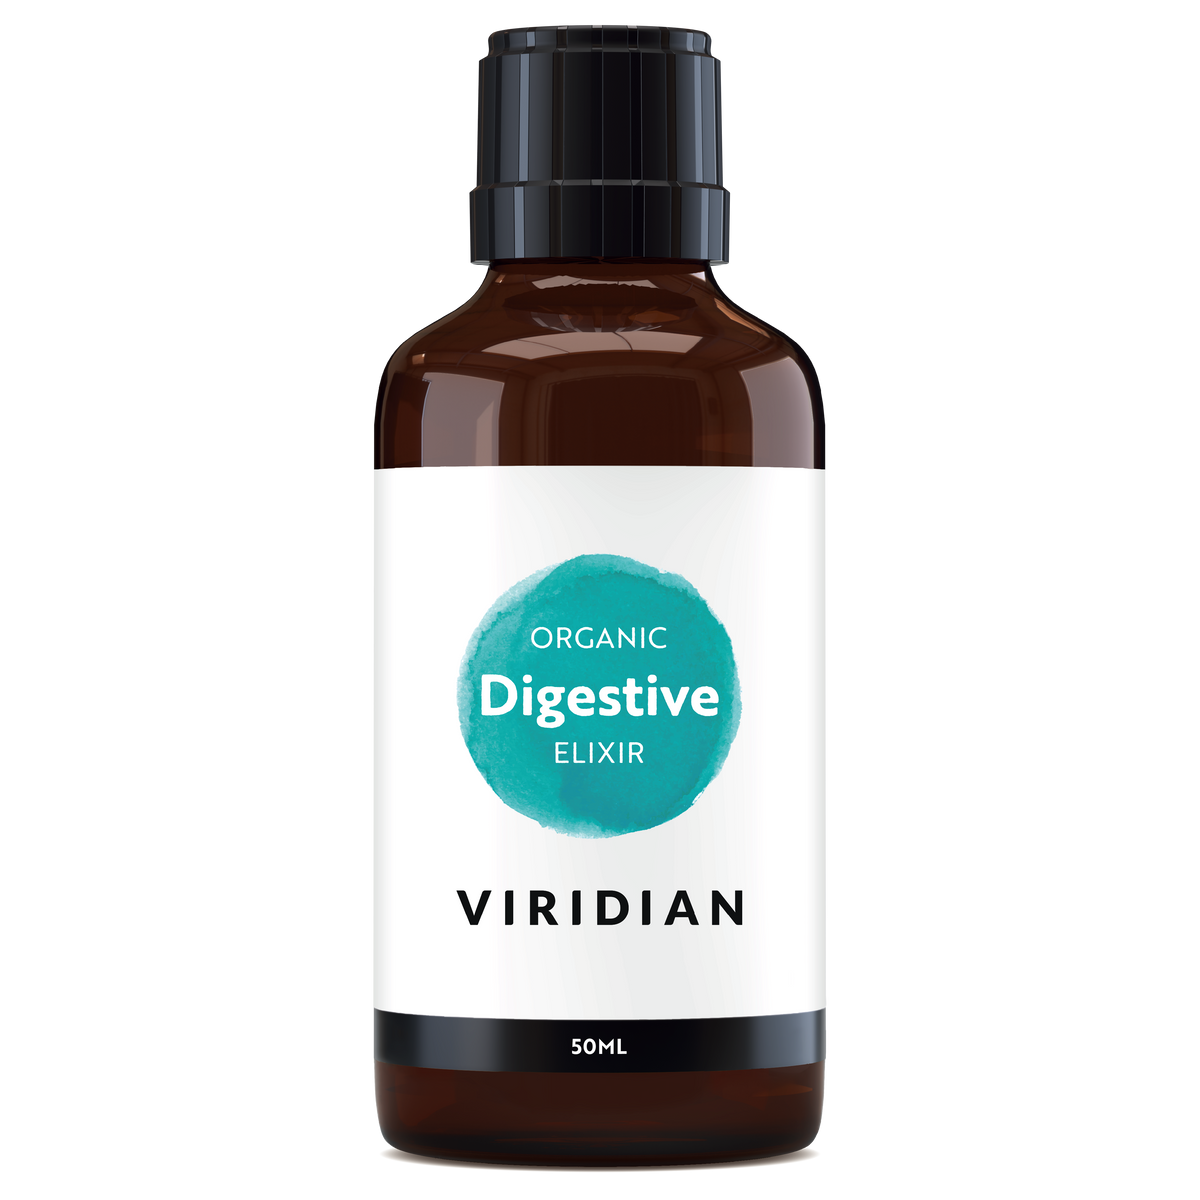 Viridian 100% Organic Digestive Elixir, 50ML - Your Health Store